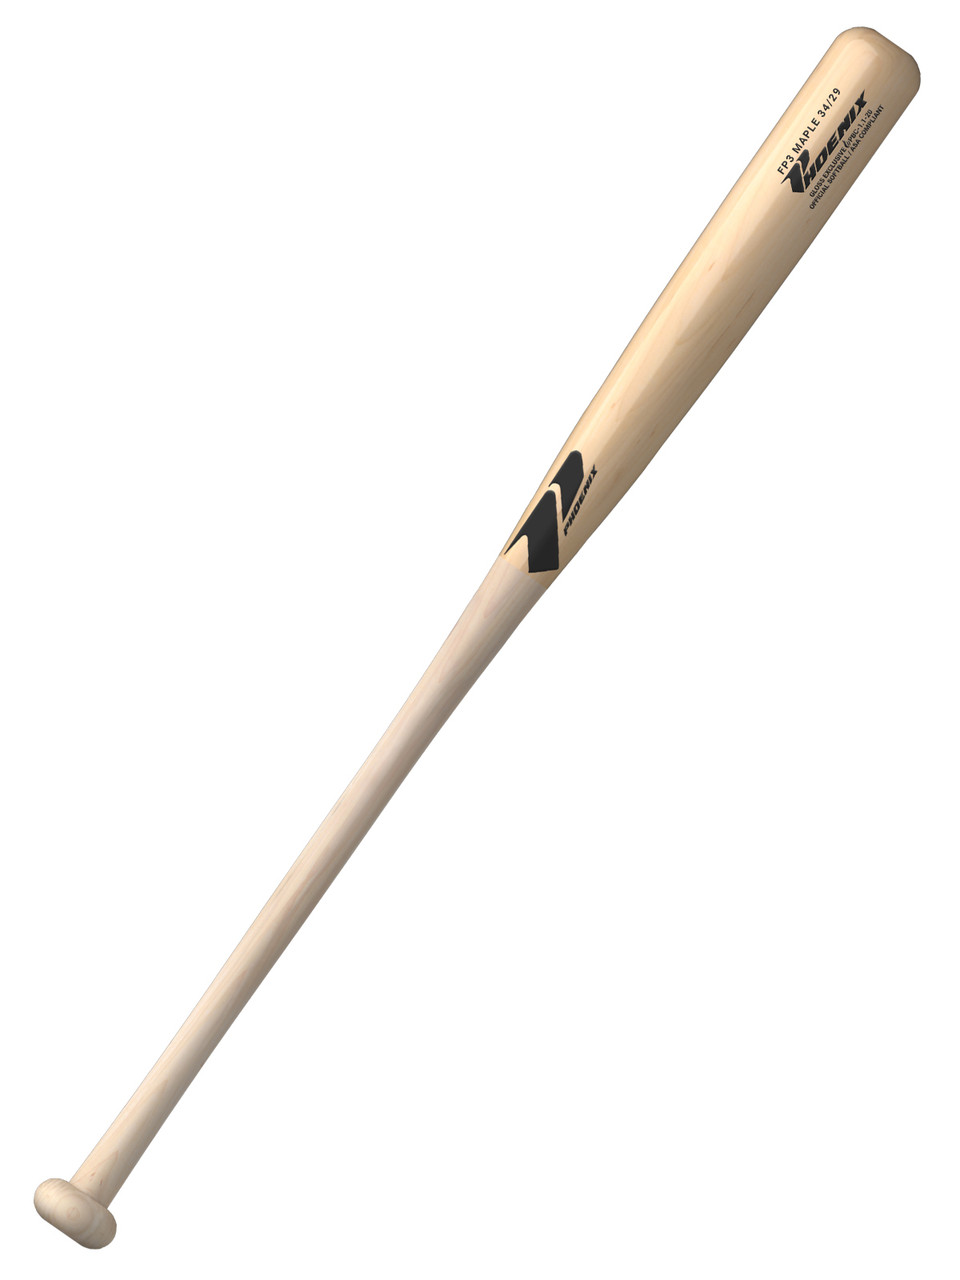 Customized Lightweight Wood Self-defense Home Defense Softball Bat